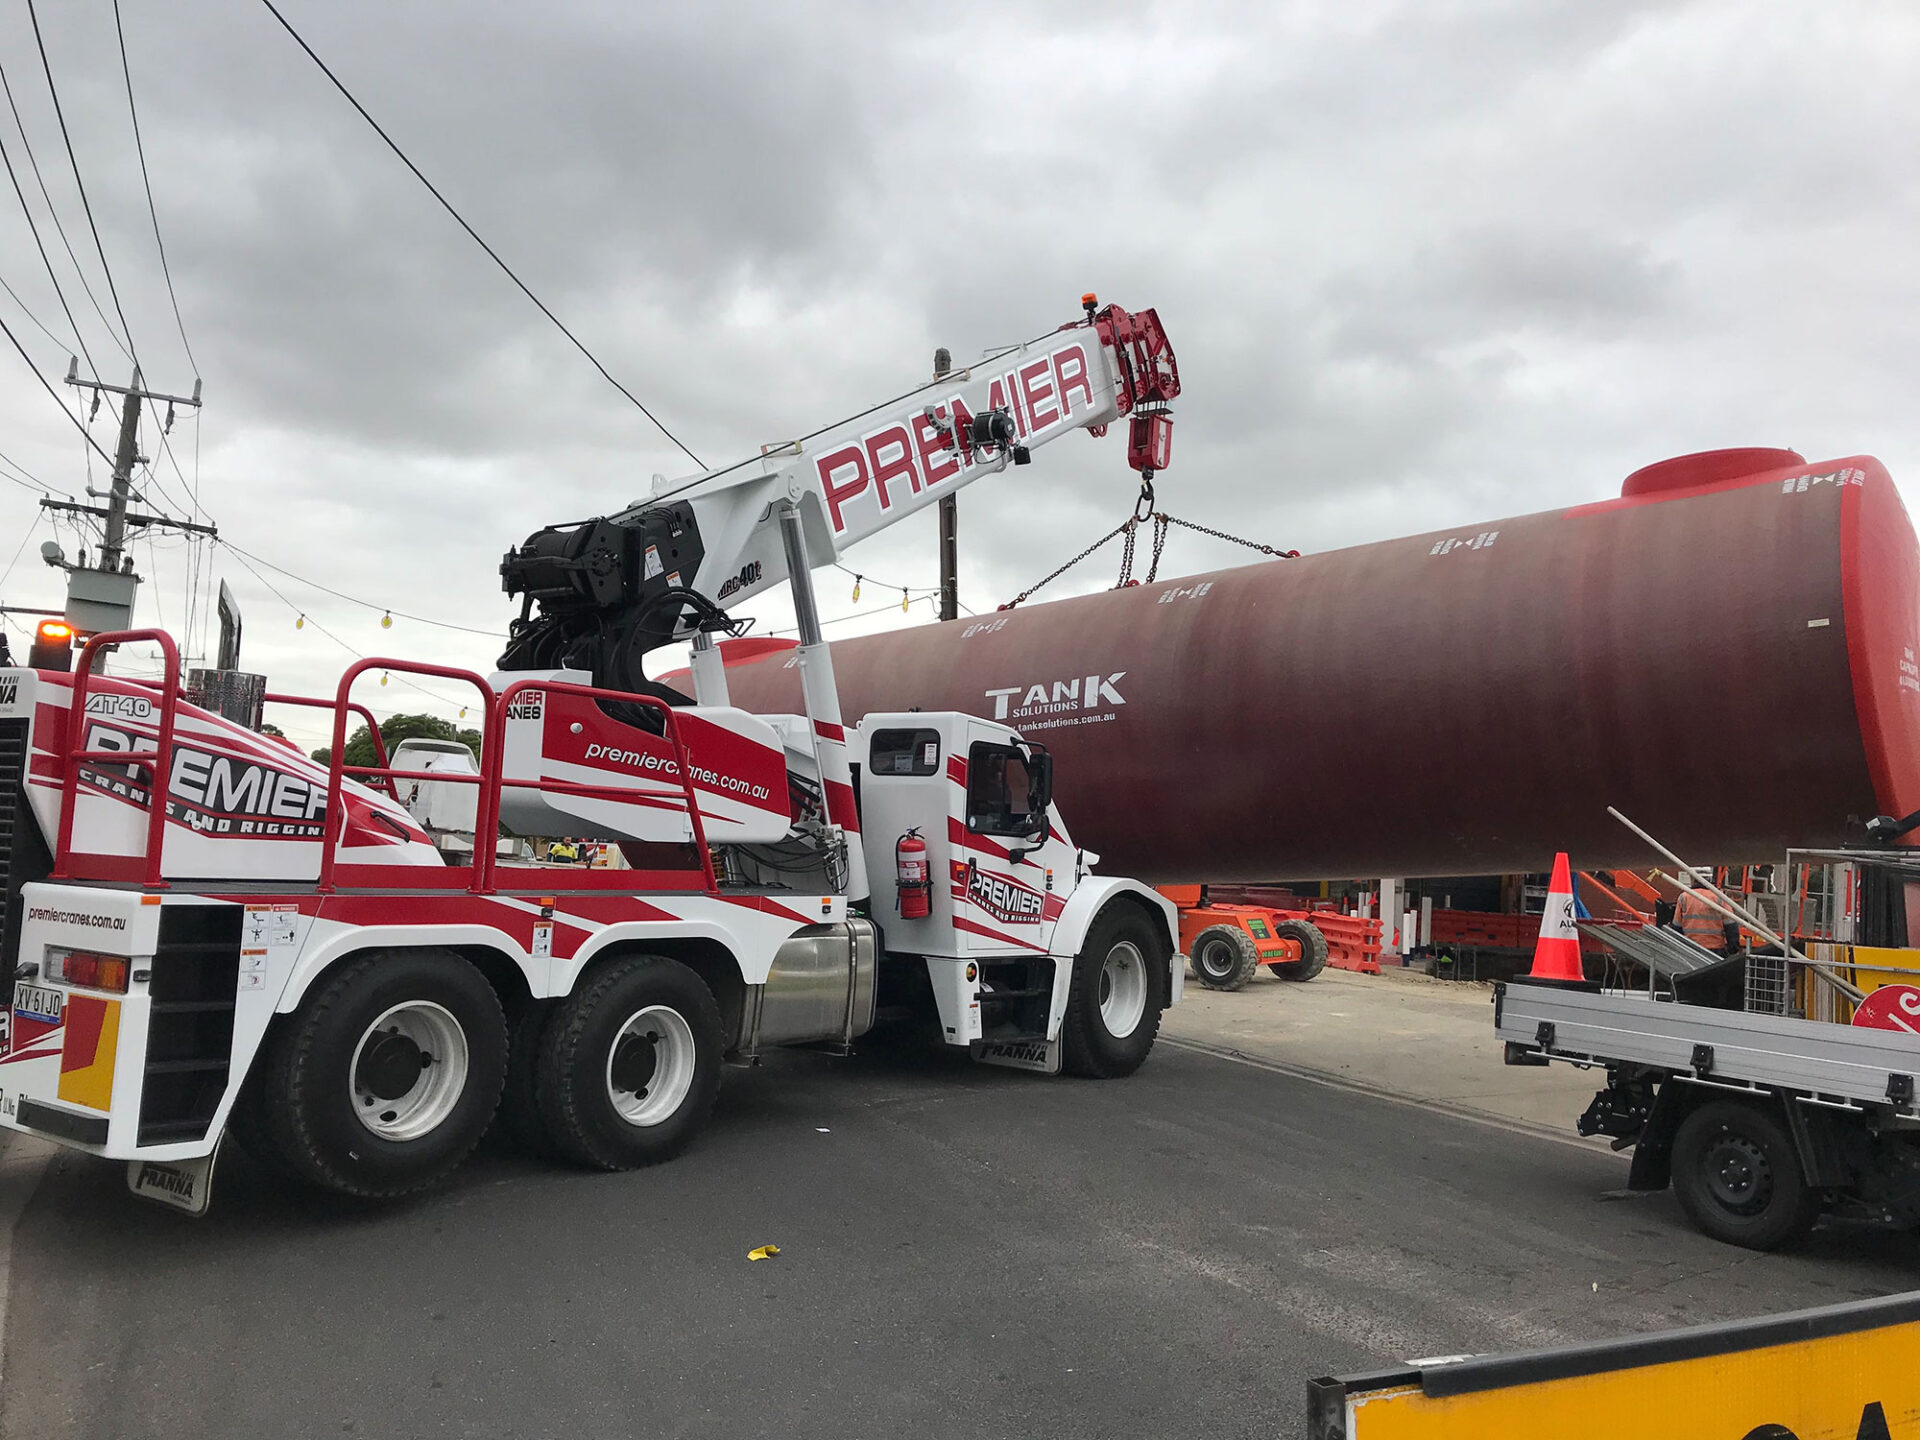 Gasweld Industries – Melbourne Cranes